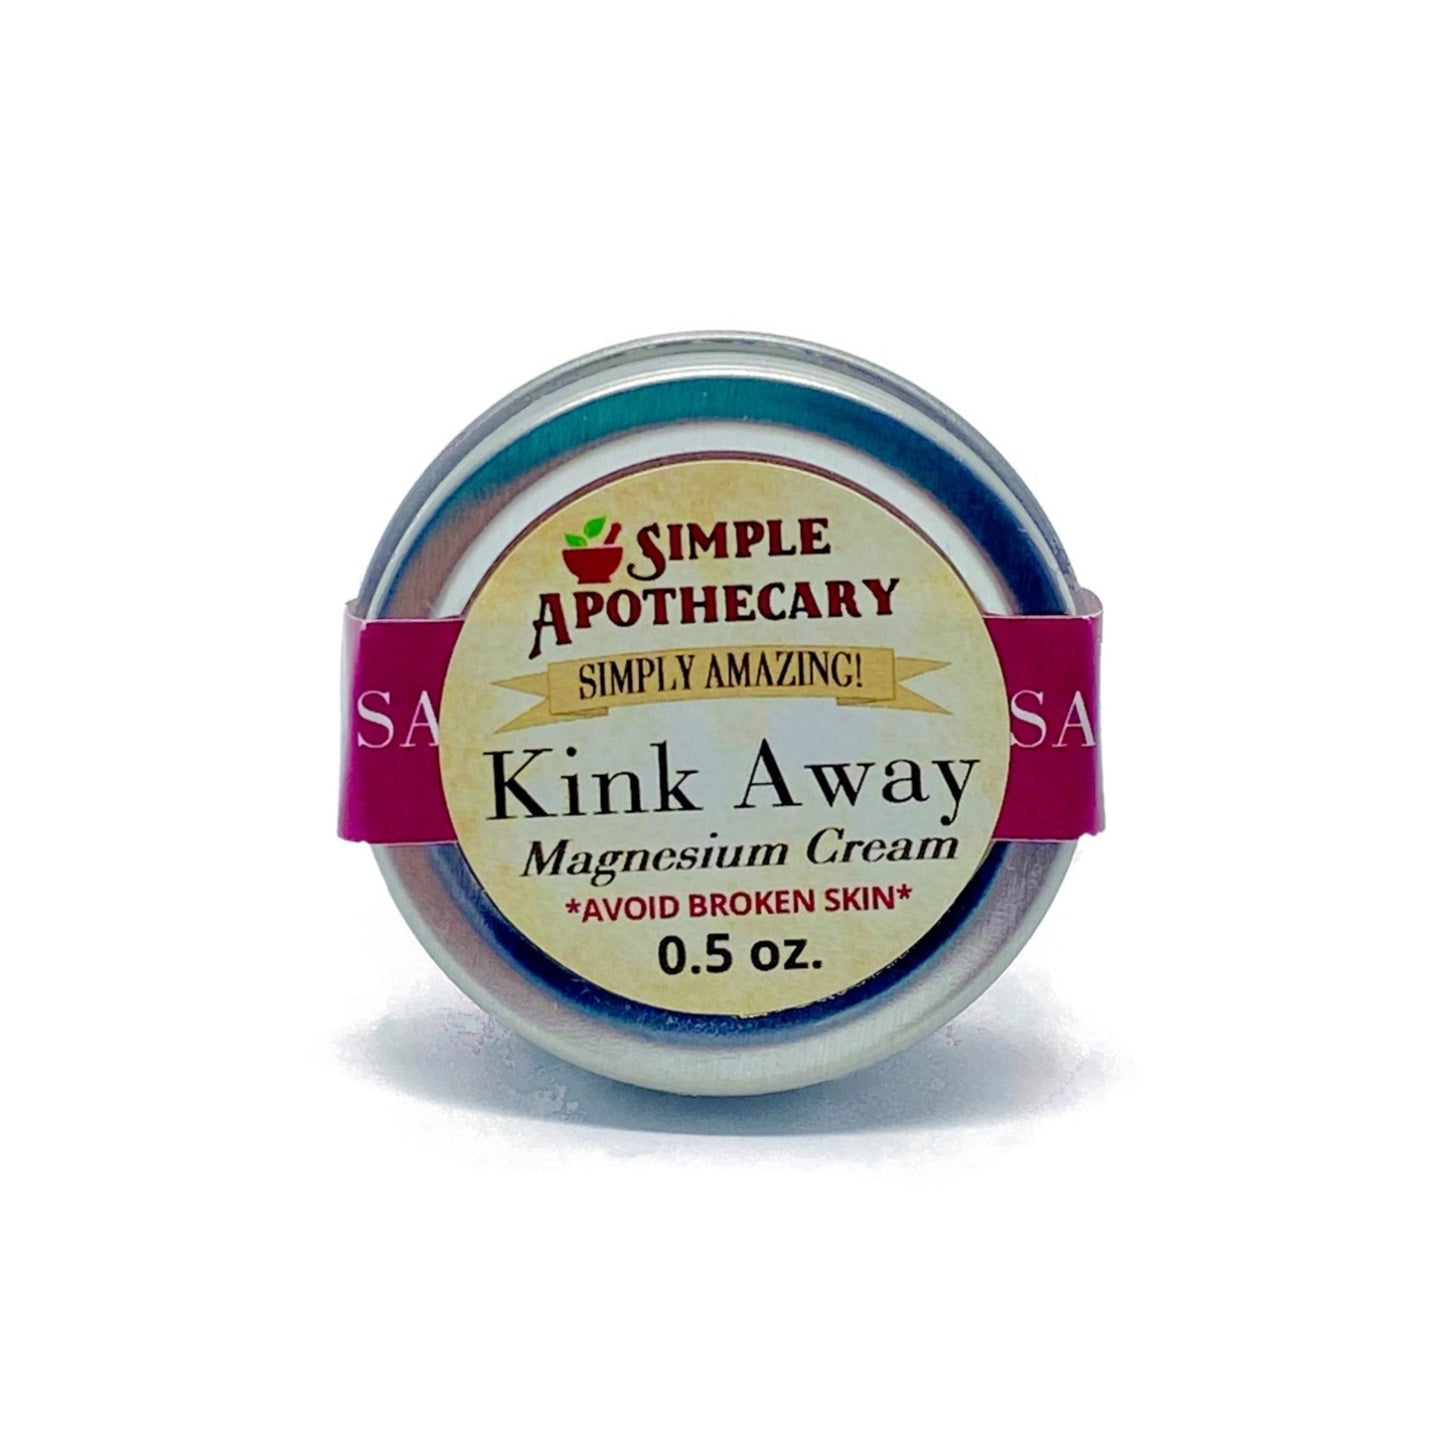 Kink Away Magnesium Cream